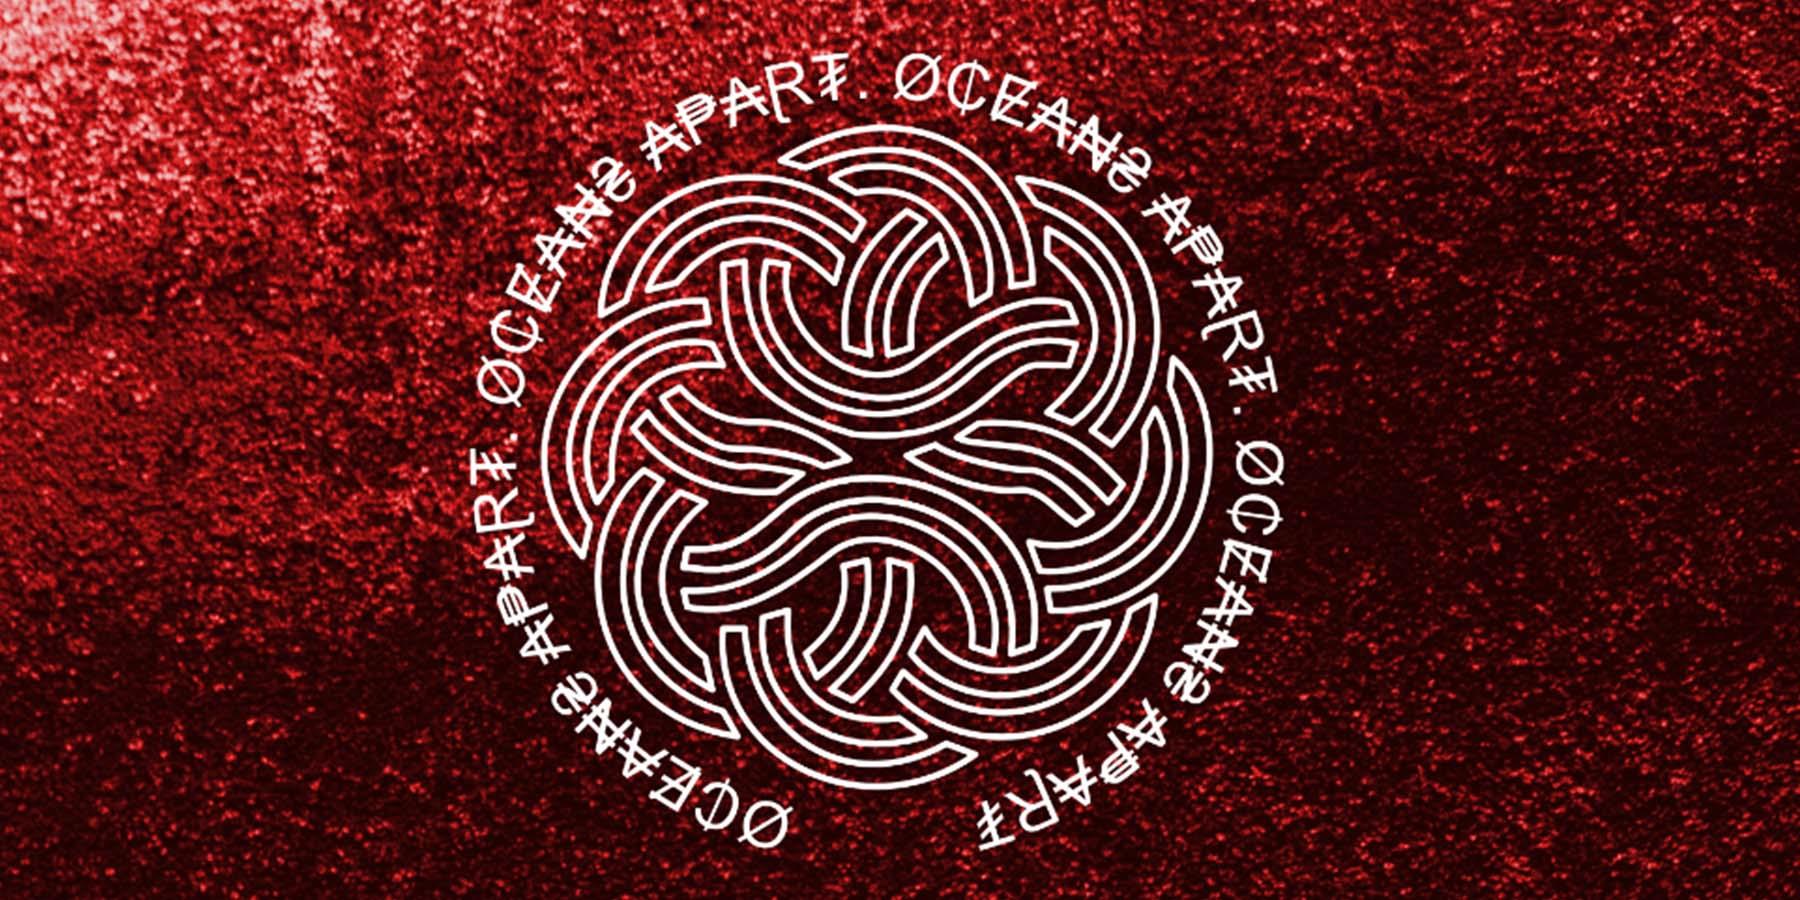 Oceans Apart logo Celtic knot